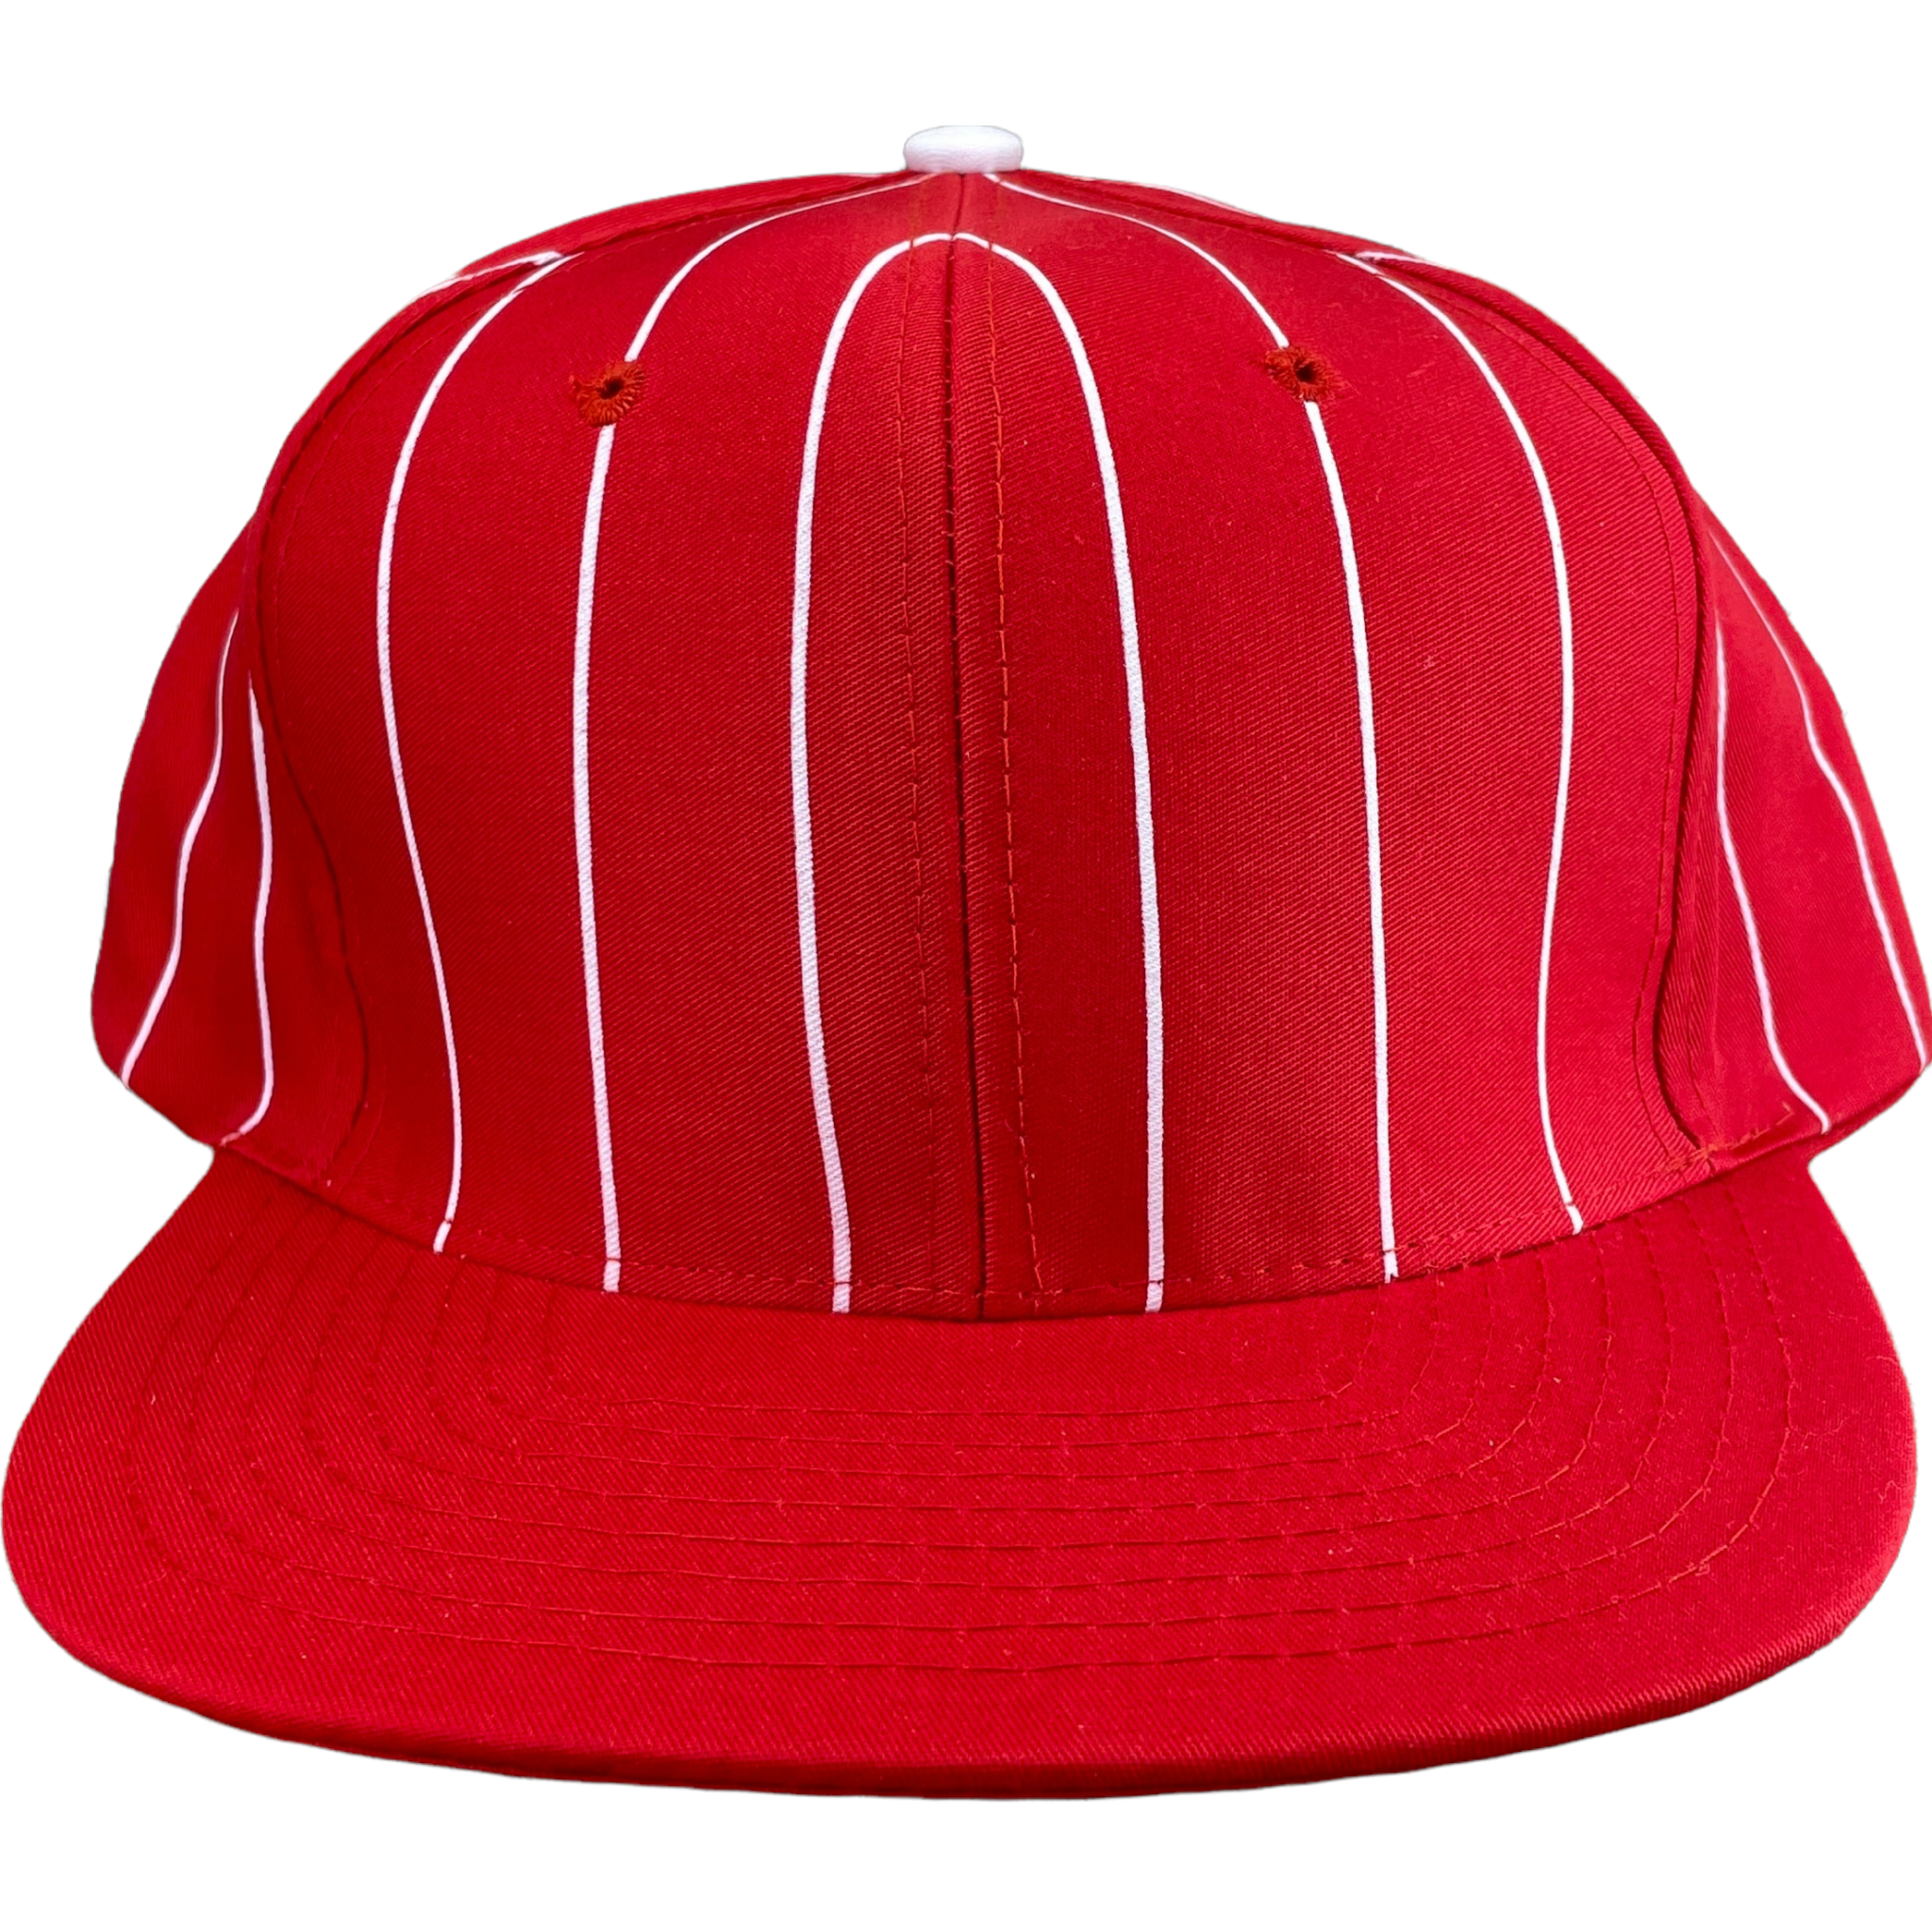 pinstripe baseball hat